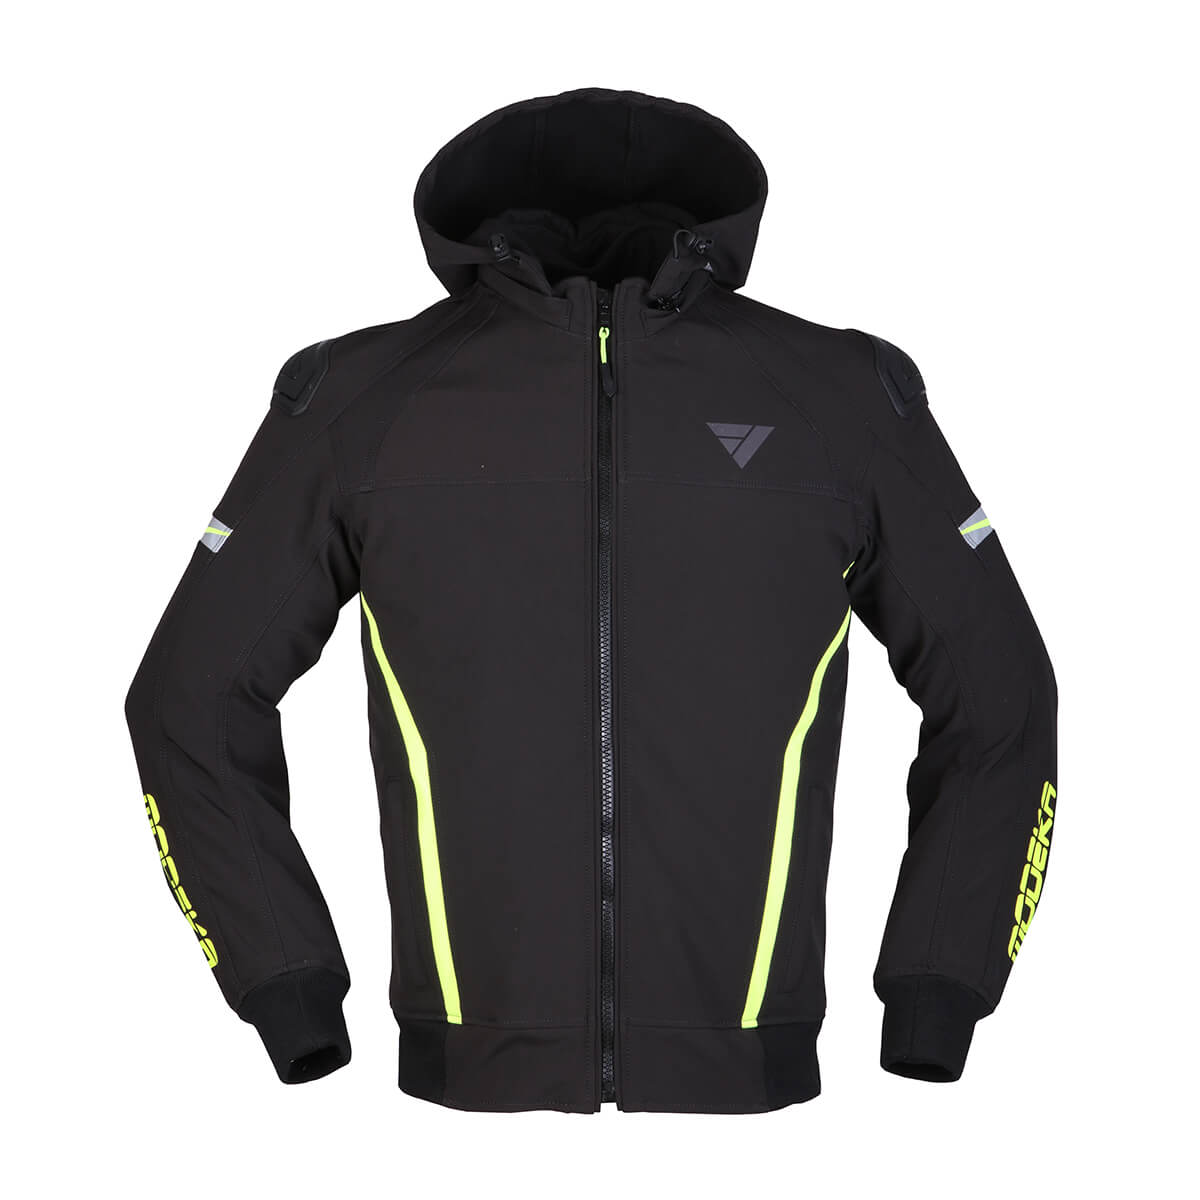 Image of Modeka Clarke Sport Jacket Black Yellow Size M ID 4045765189559